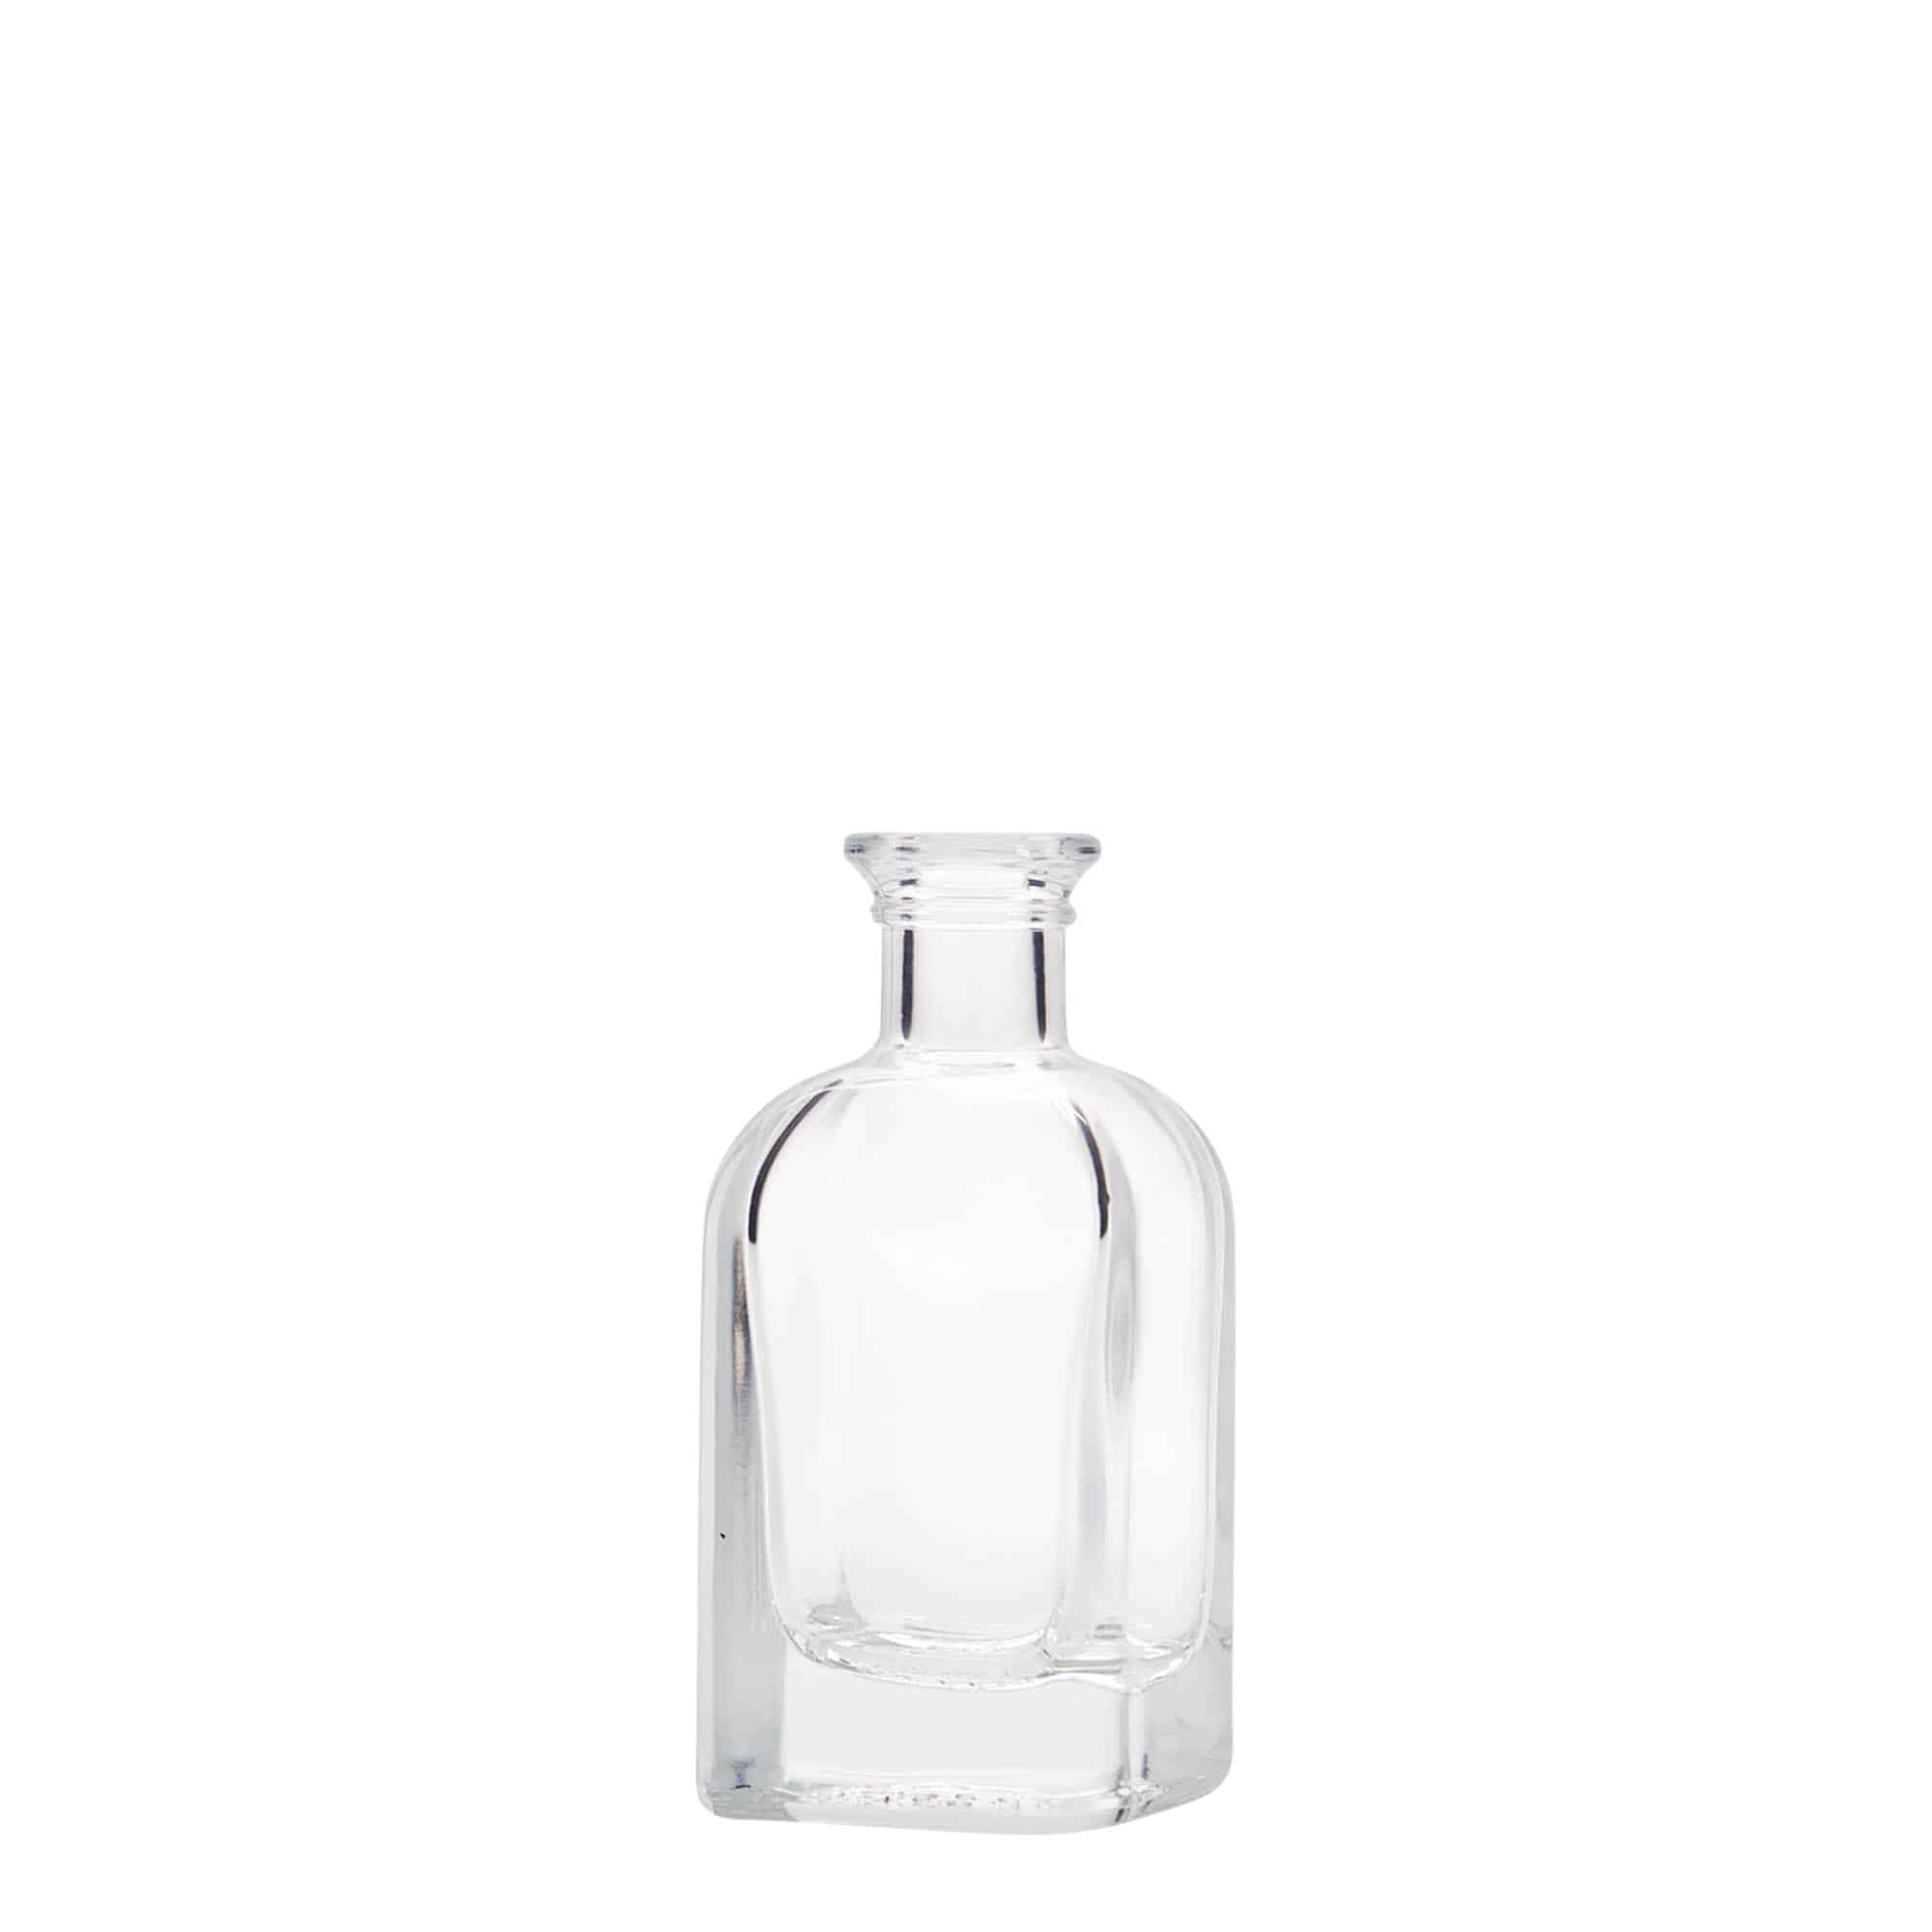 40 ml glass apothecary bottle Carré, square, closure: cork